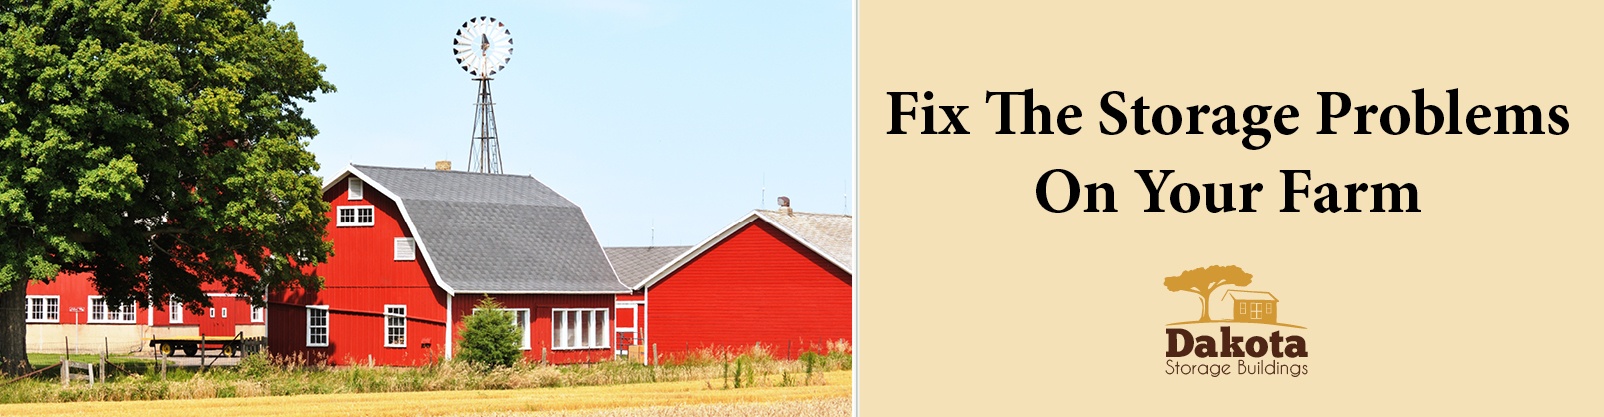 Fix The Storage Problems On Your Farm